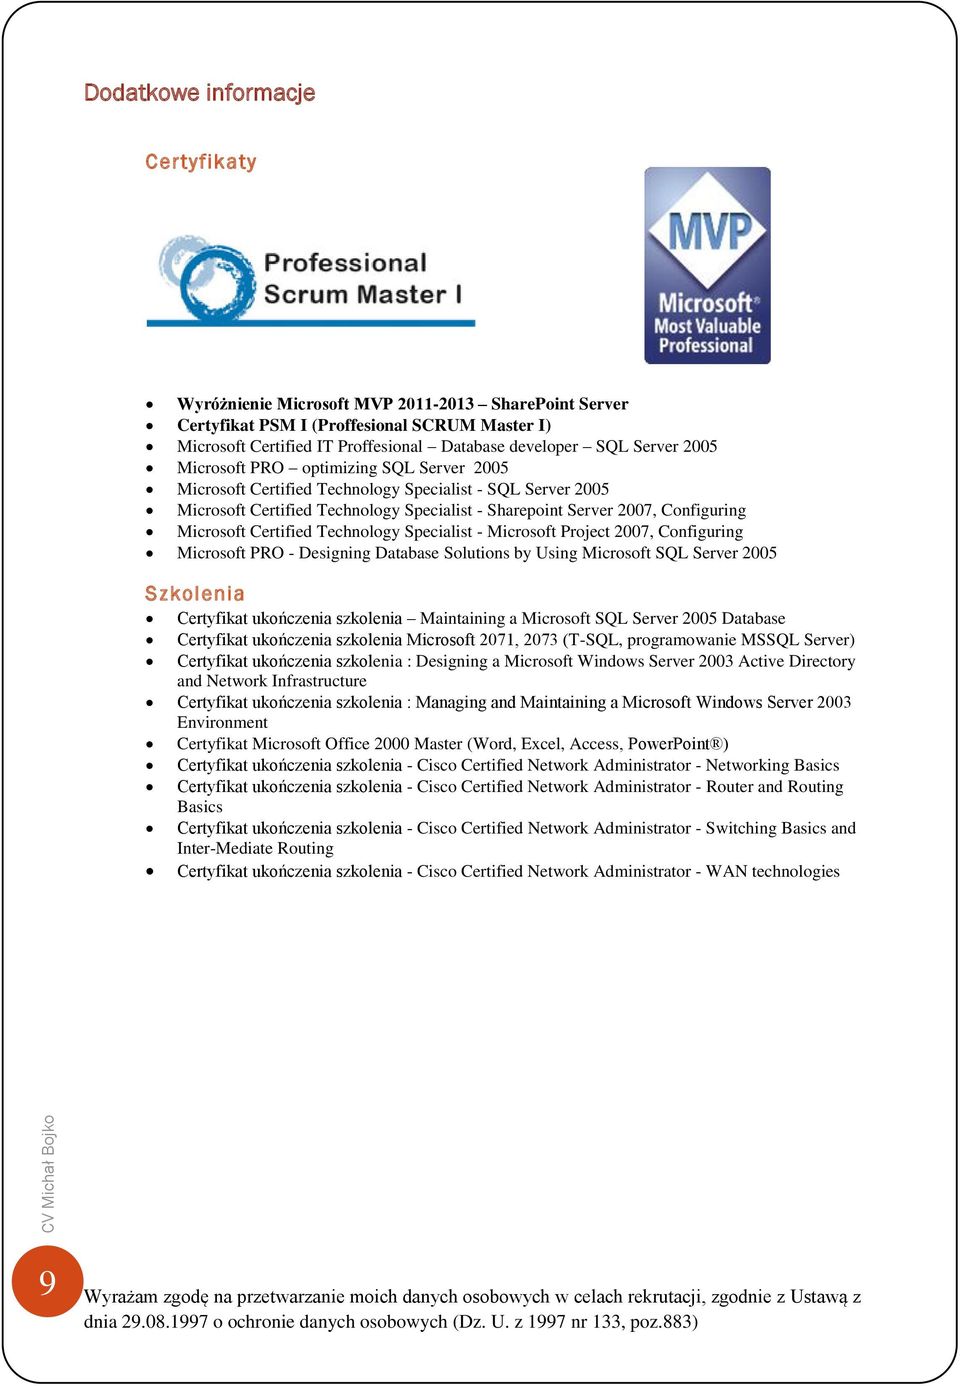 Certified Technology Specialist - Microsoft Project 2007, Configuring Microsoft PRO - Designing Database Solutions by Using Microsoft SQL Server 2005 Szkolenia Certyfikat ukończenia szkolenia